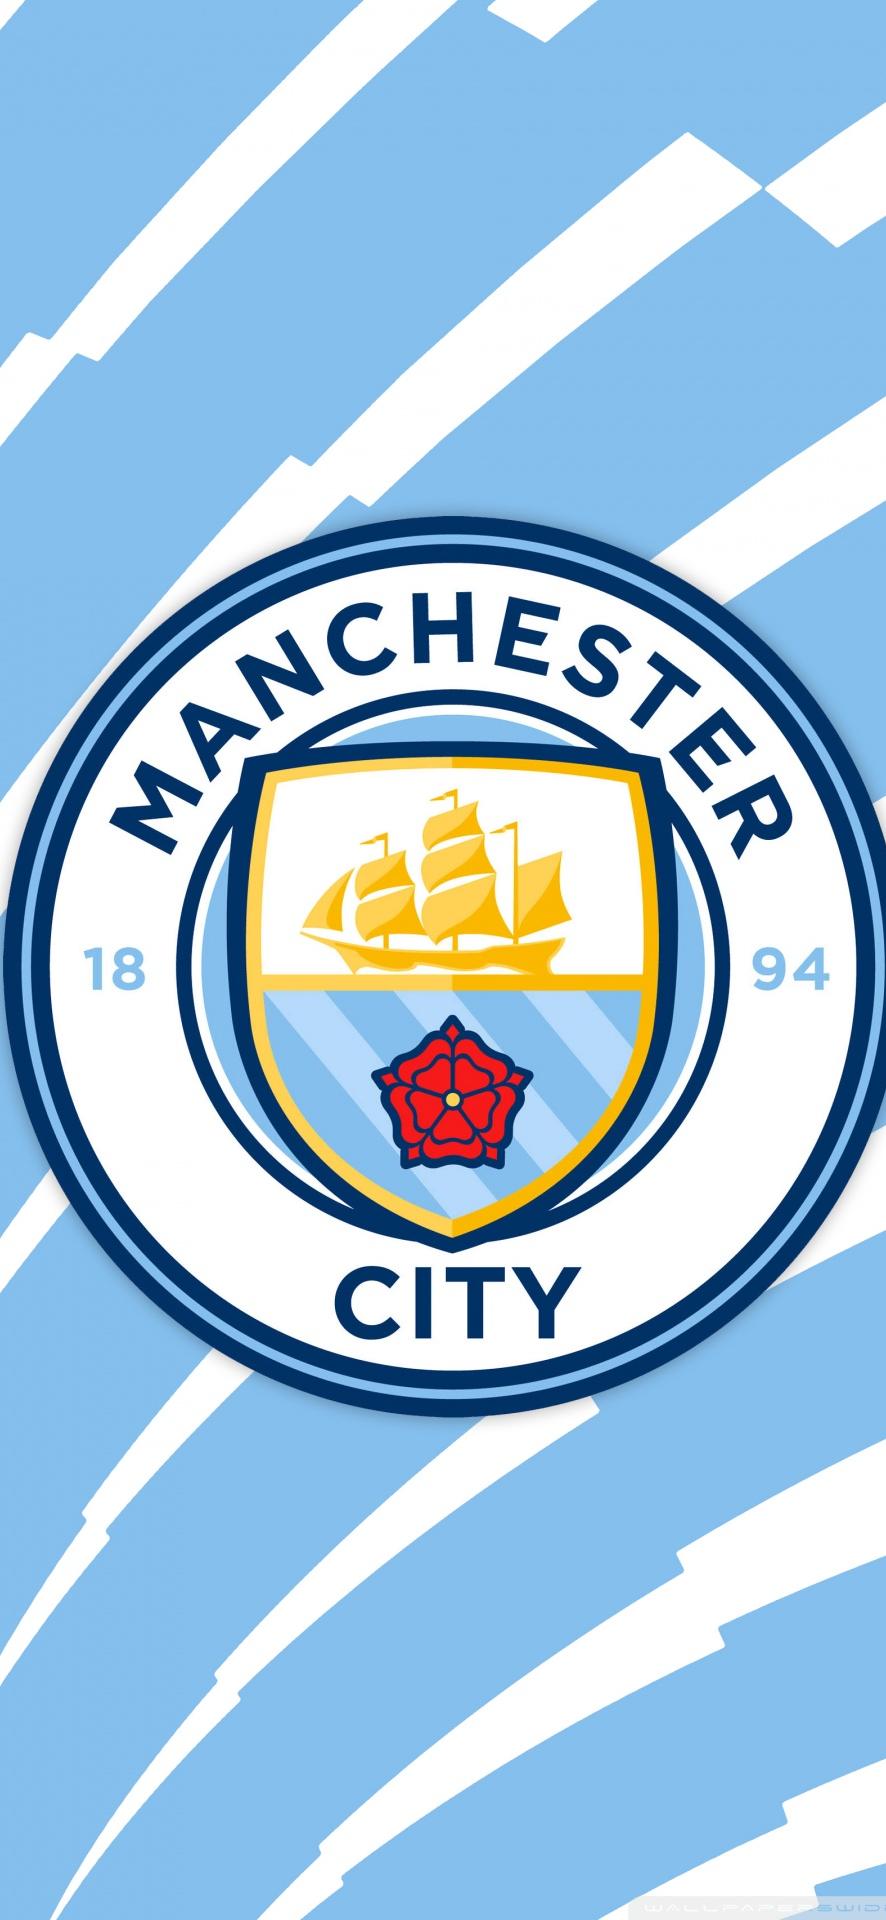 Man City Badge